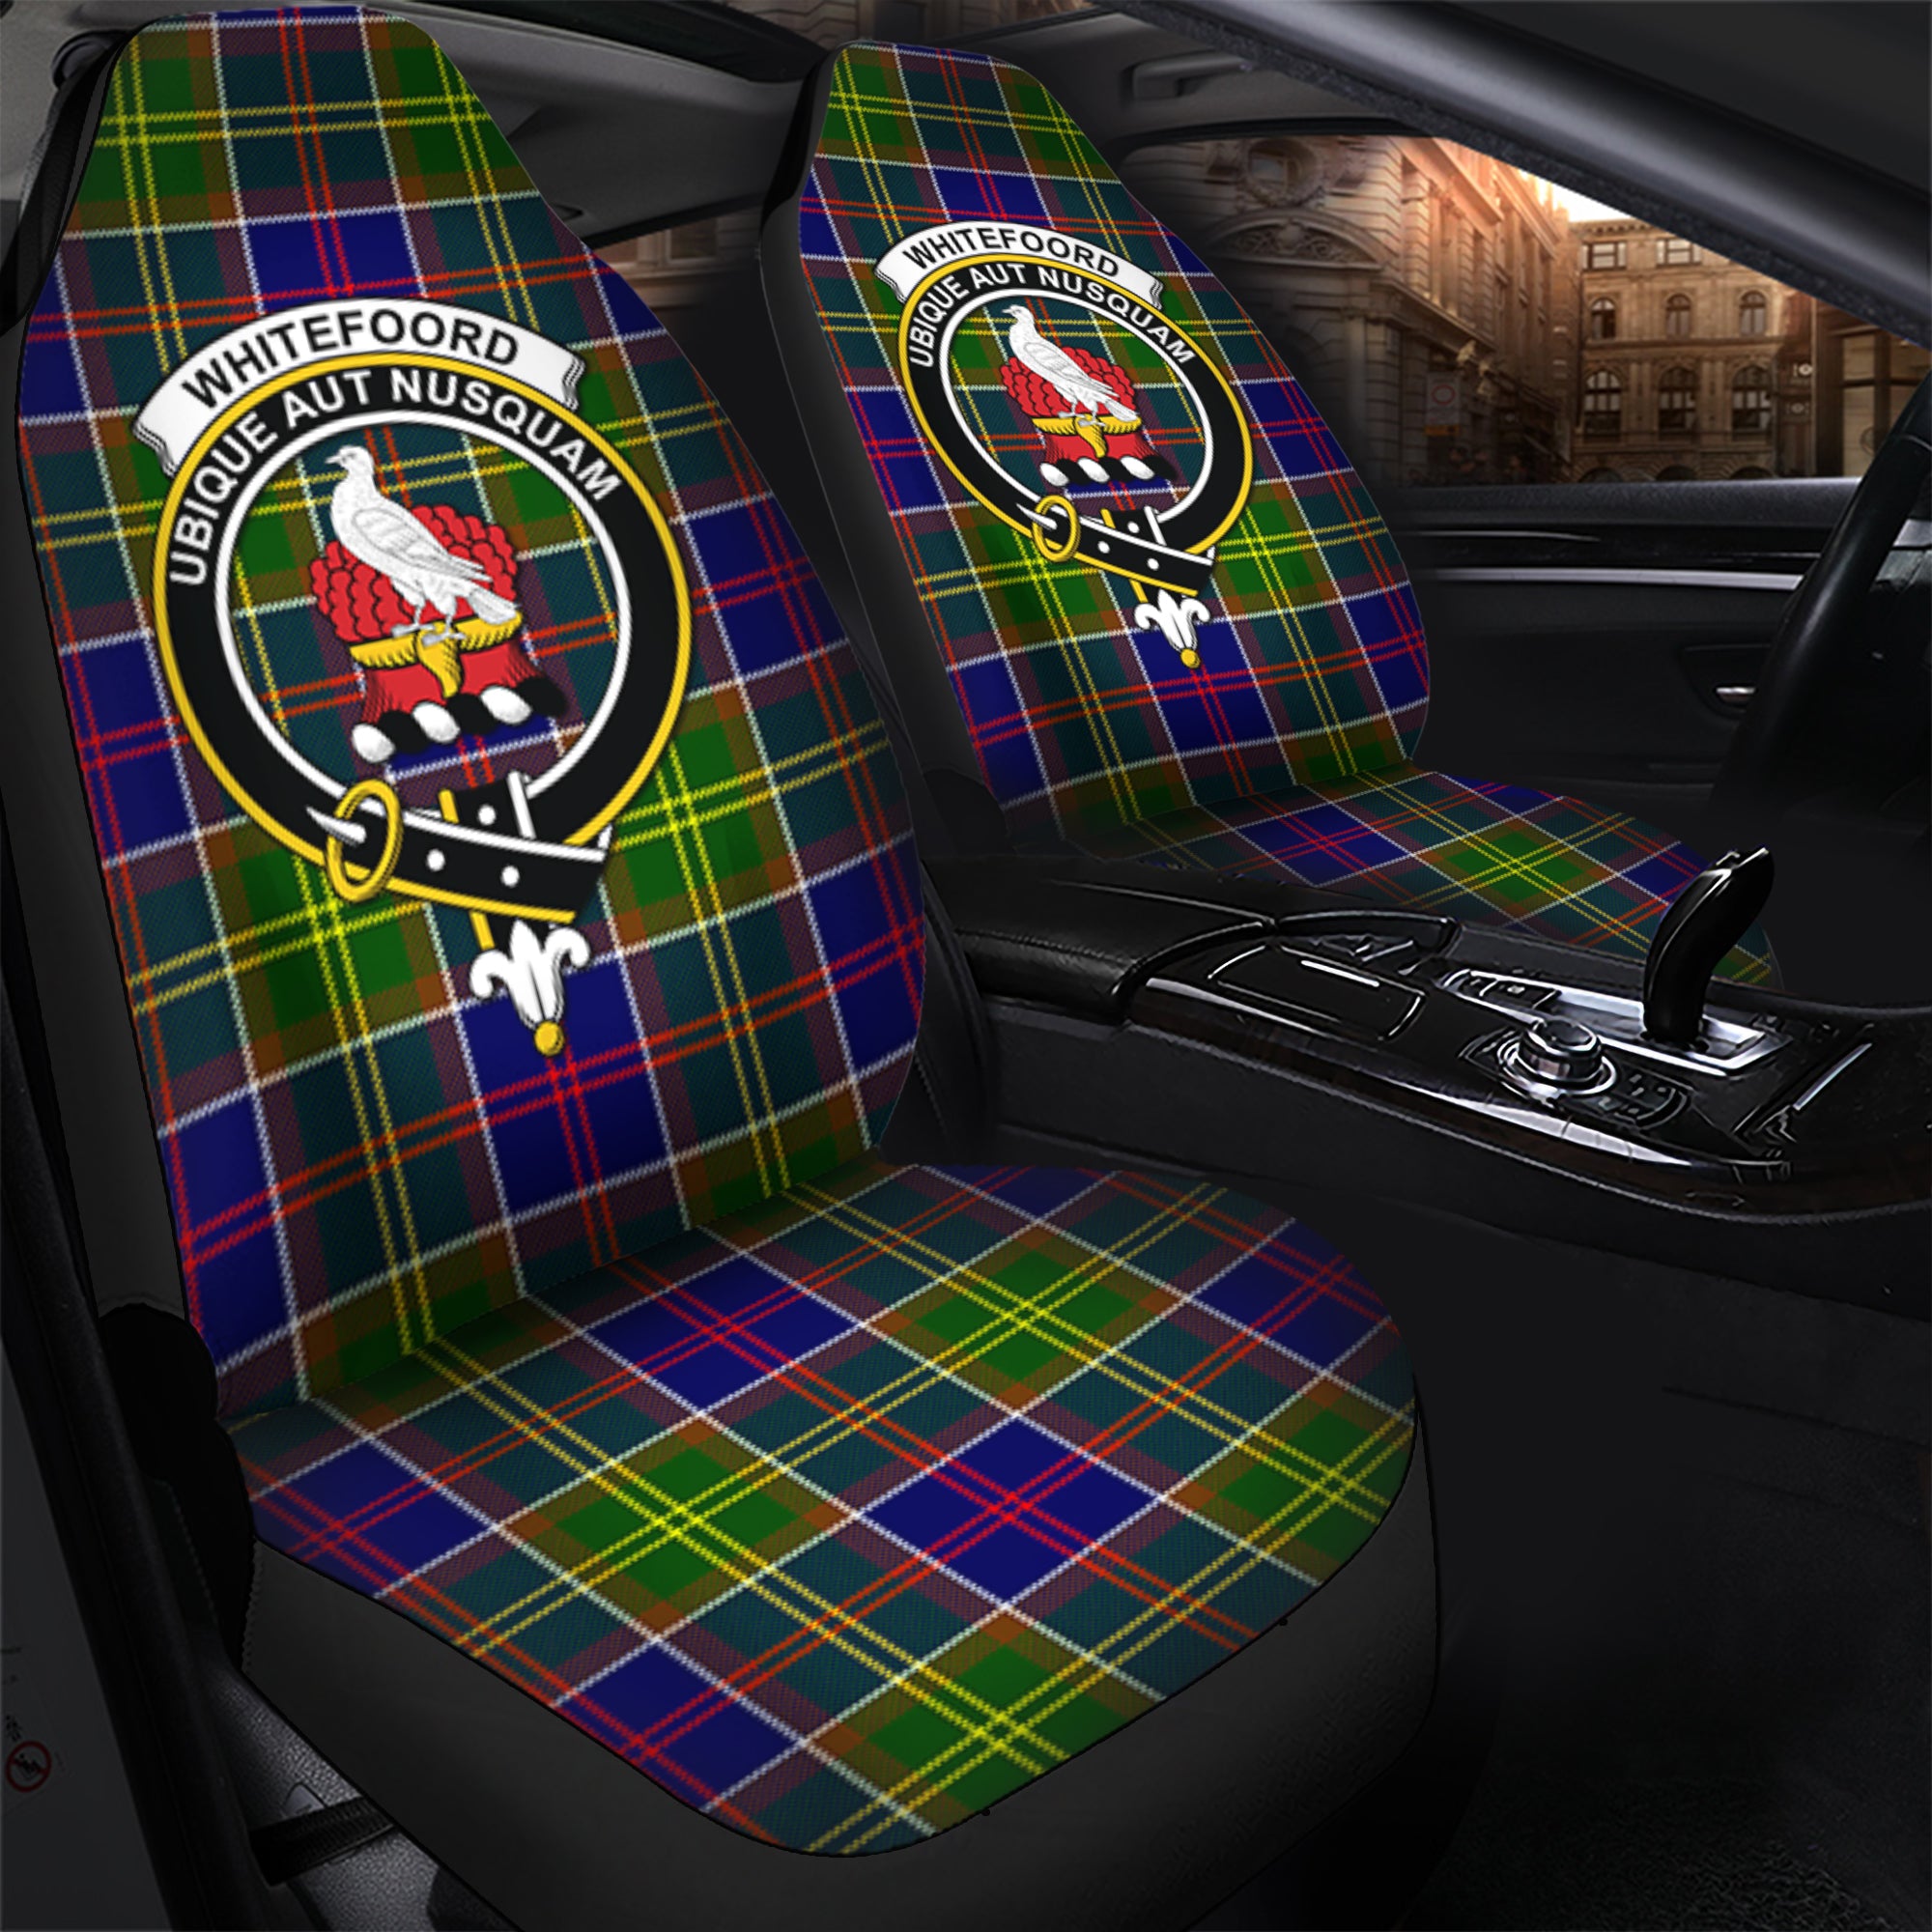 Whitefoord Modern Clan Tartan Car Seat Cover, Family Crest Tartan Seat Cover TS23